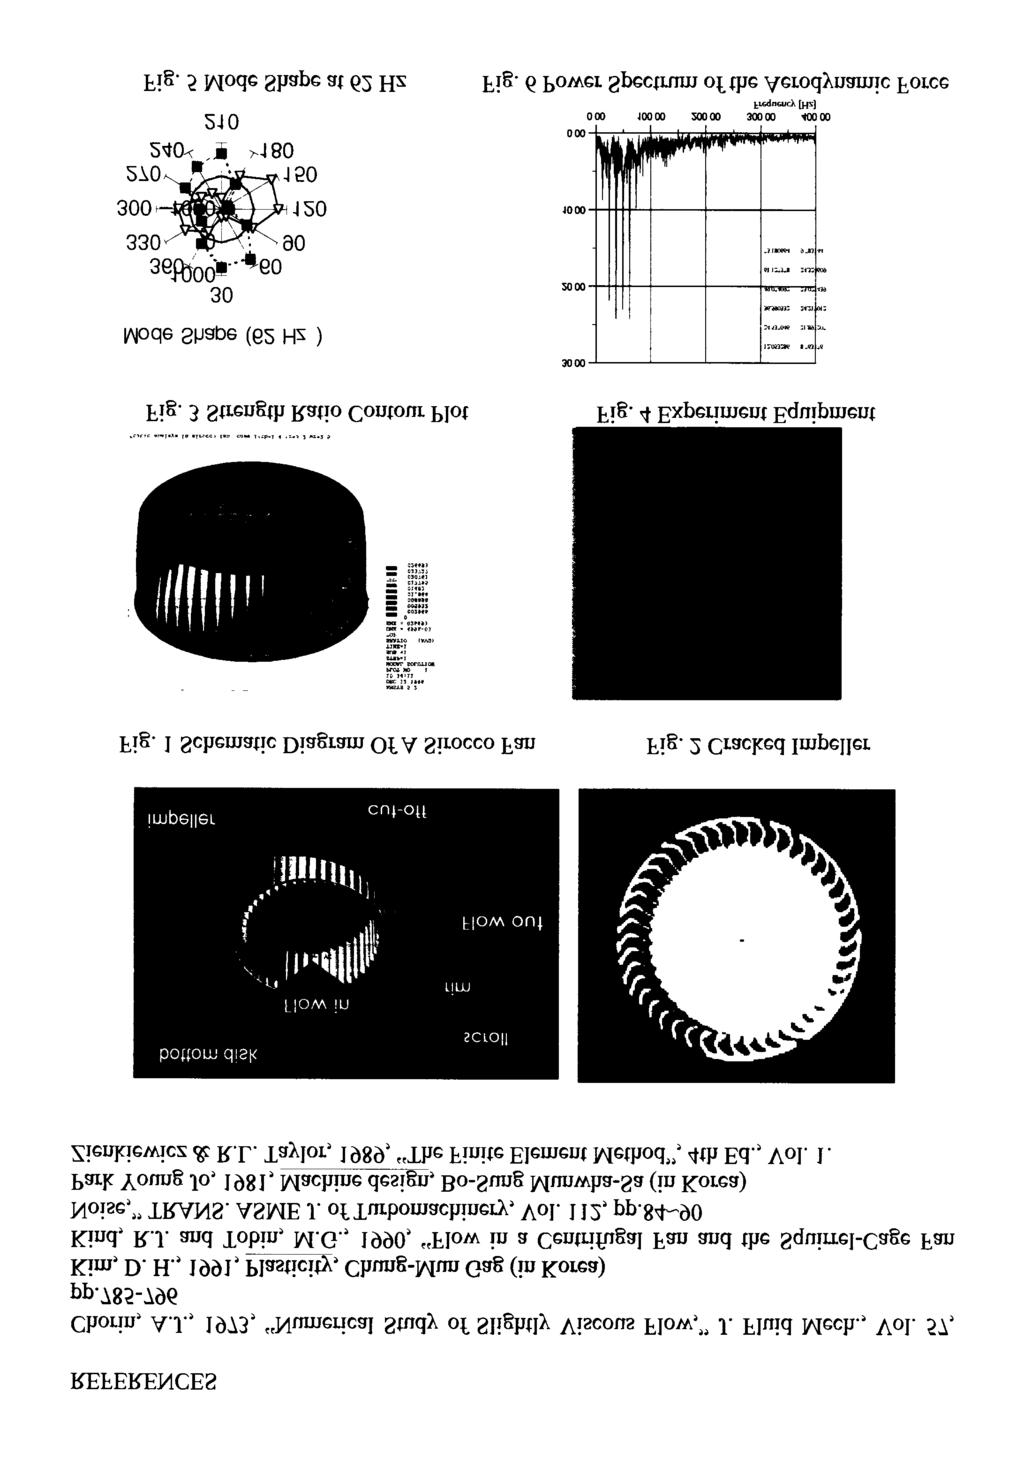 REFERENCES Chorin, A.J., 1973, Numerical Study of Slightly Viscous Flow, J. Fluid Mech., Vol. 57, pp.785-796 Kim, D. H., 1991, Plasticity, Chung-Mun Ga